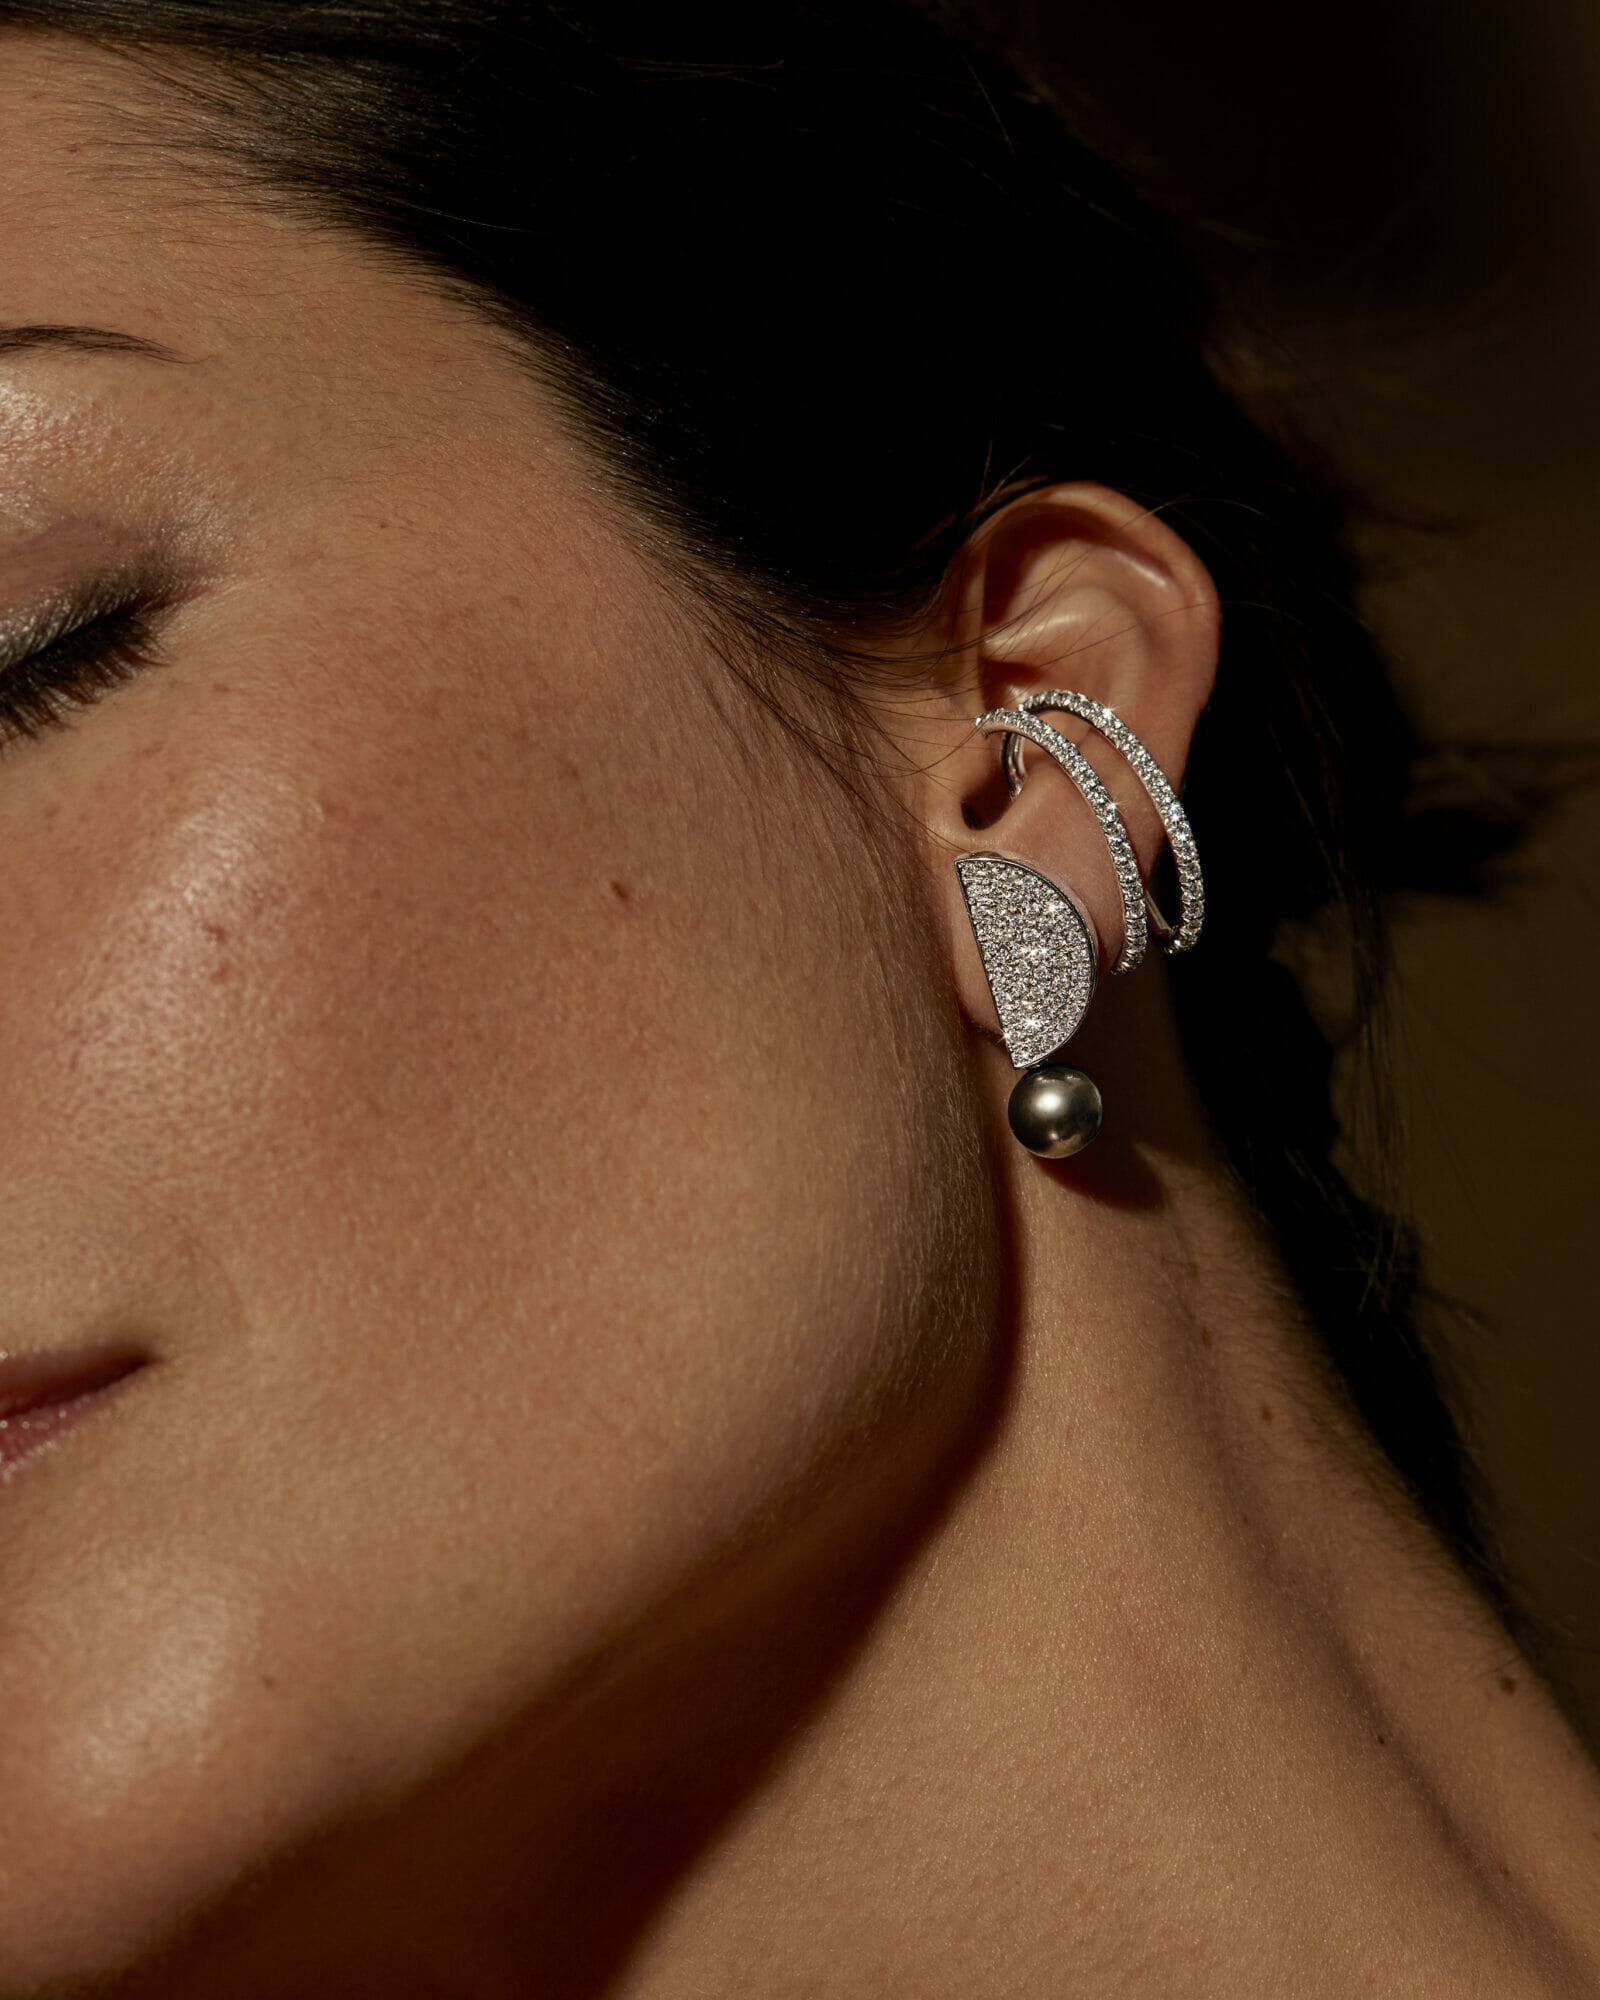 Diamonds and pearls, woman wearing earrings